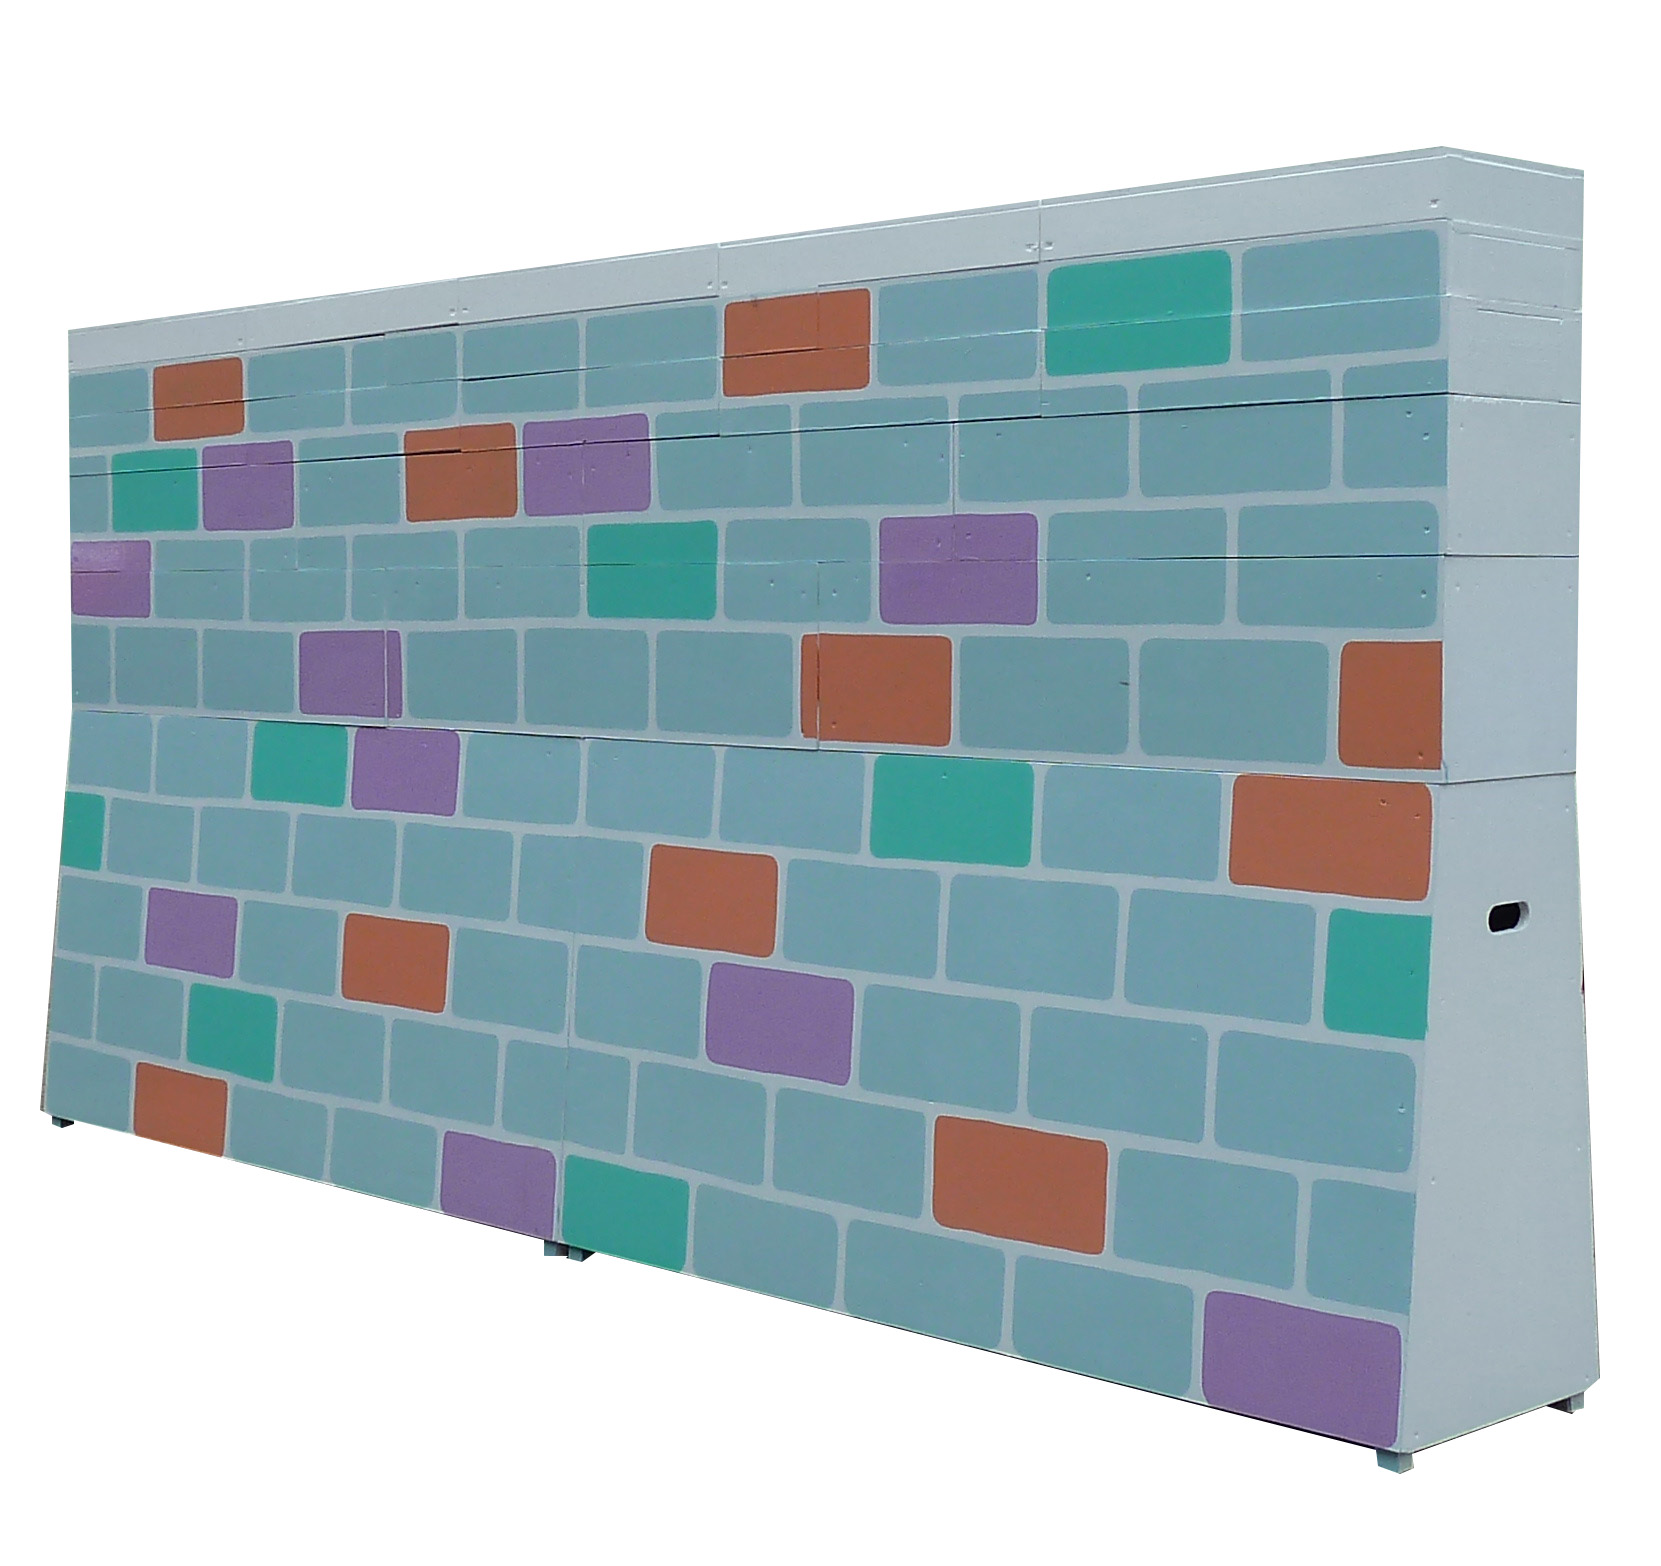 Wall with pastel bricks